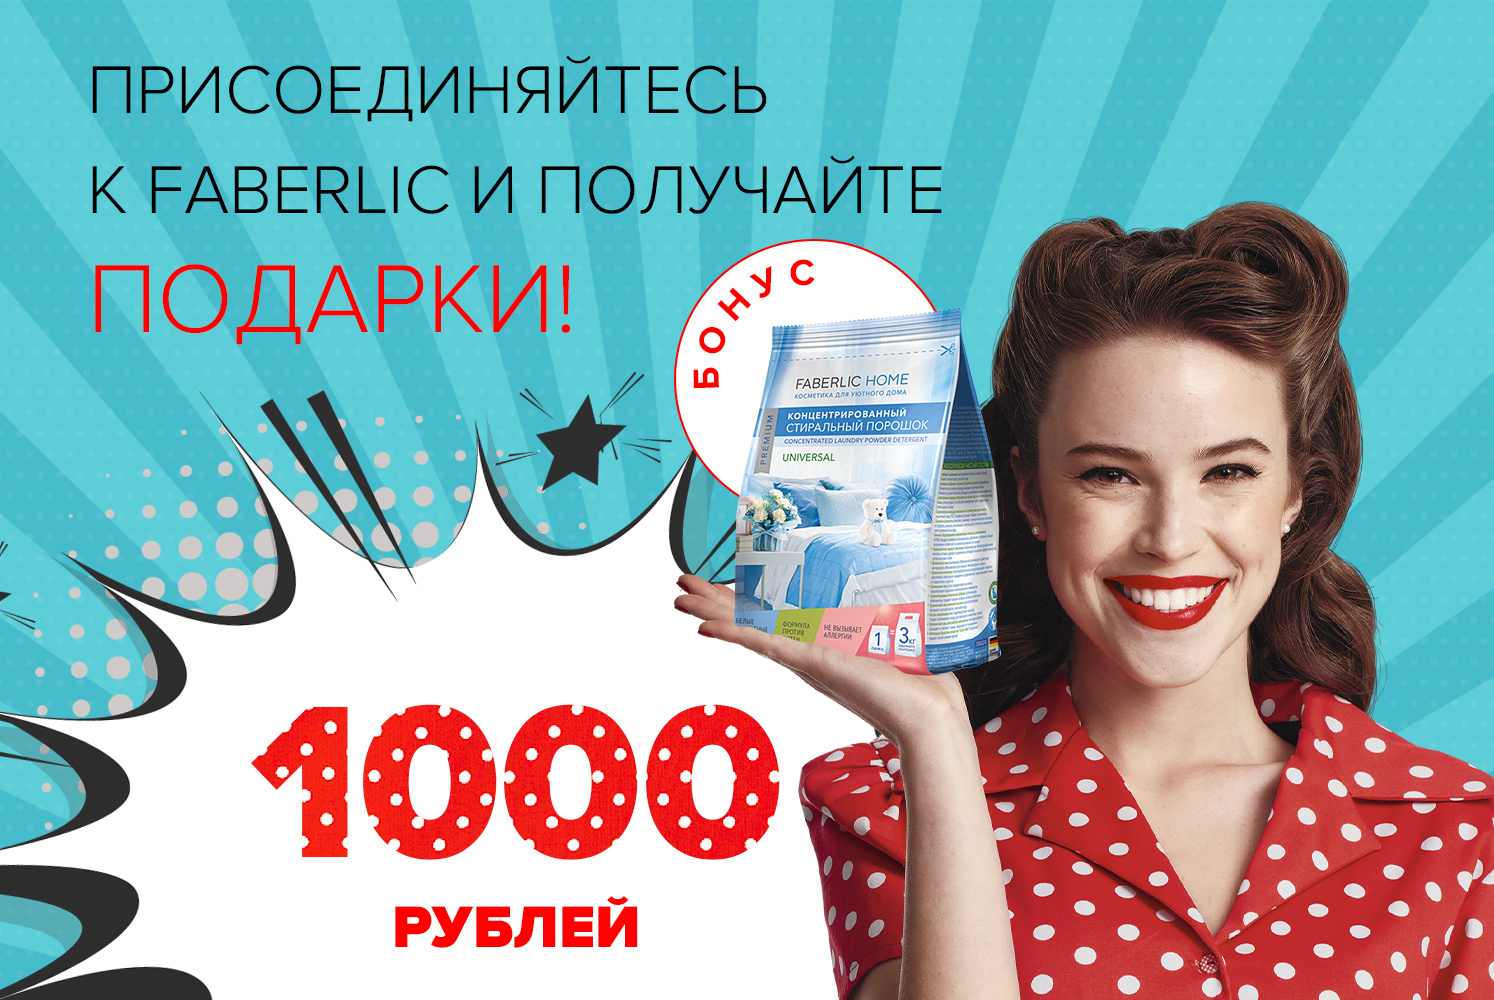 Start-1494-1000-14-2020 ПОДАРКИ